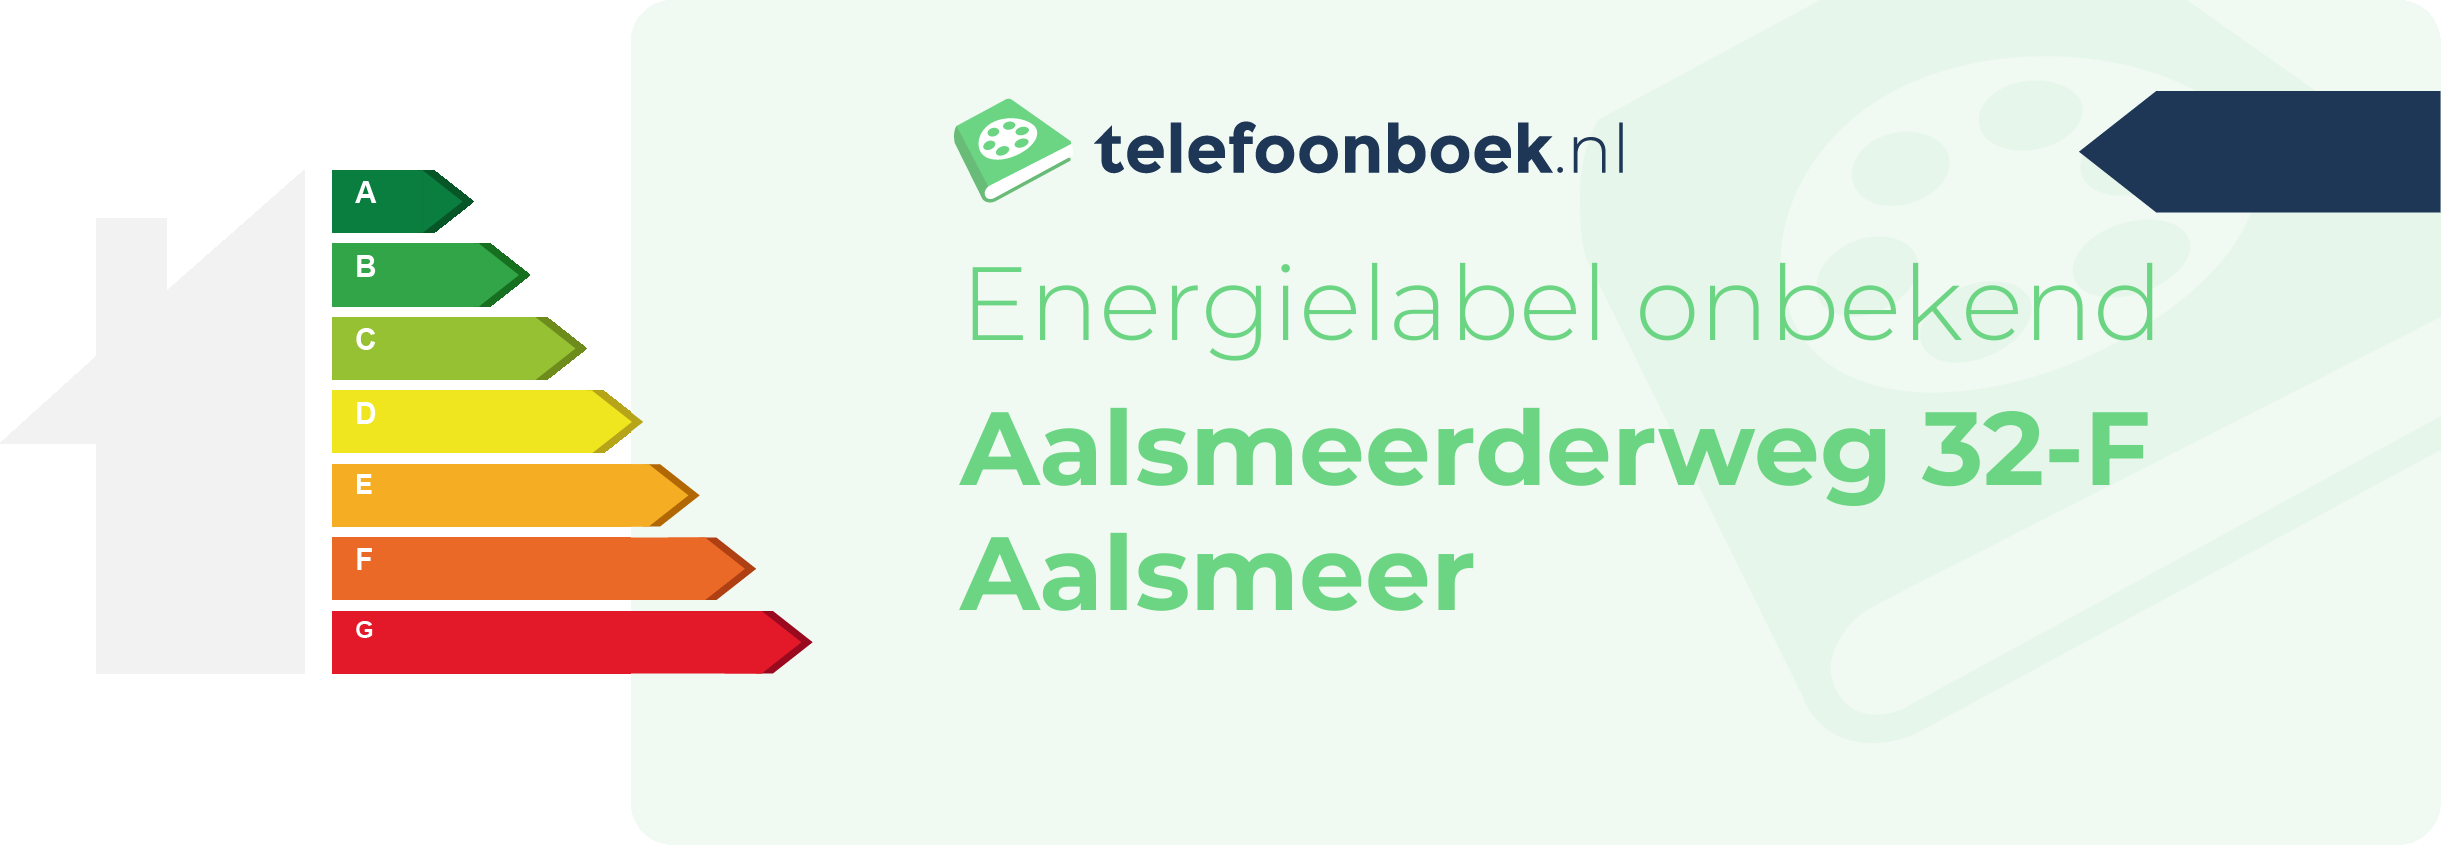 Energielabel Aalsmeerderweg 32-F Aalsmeer